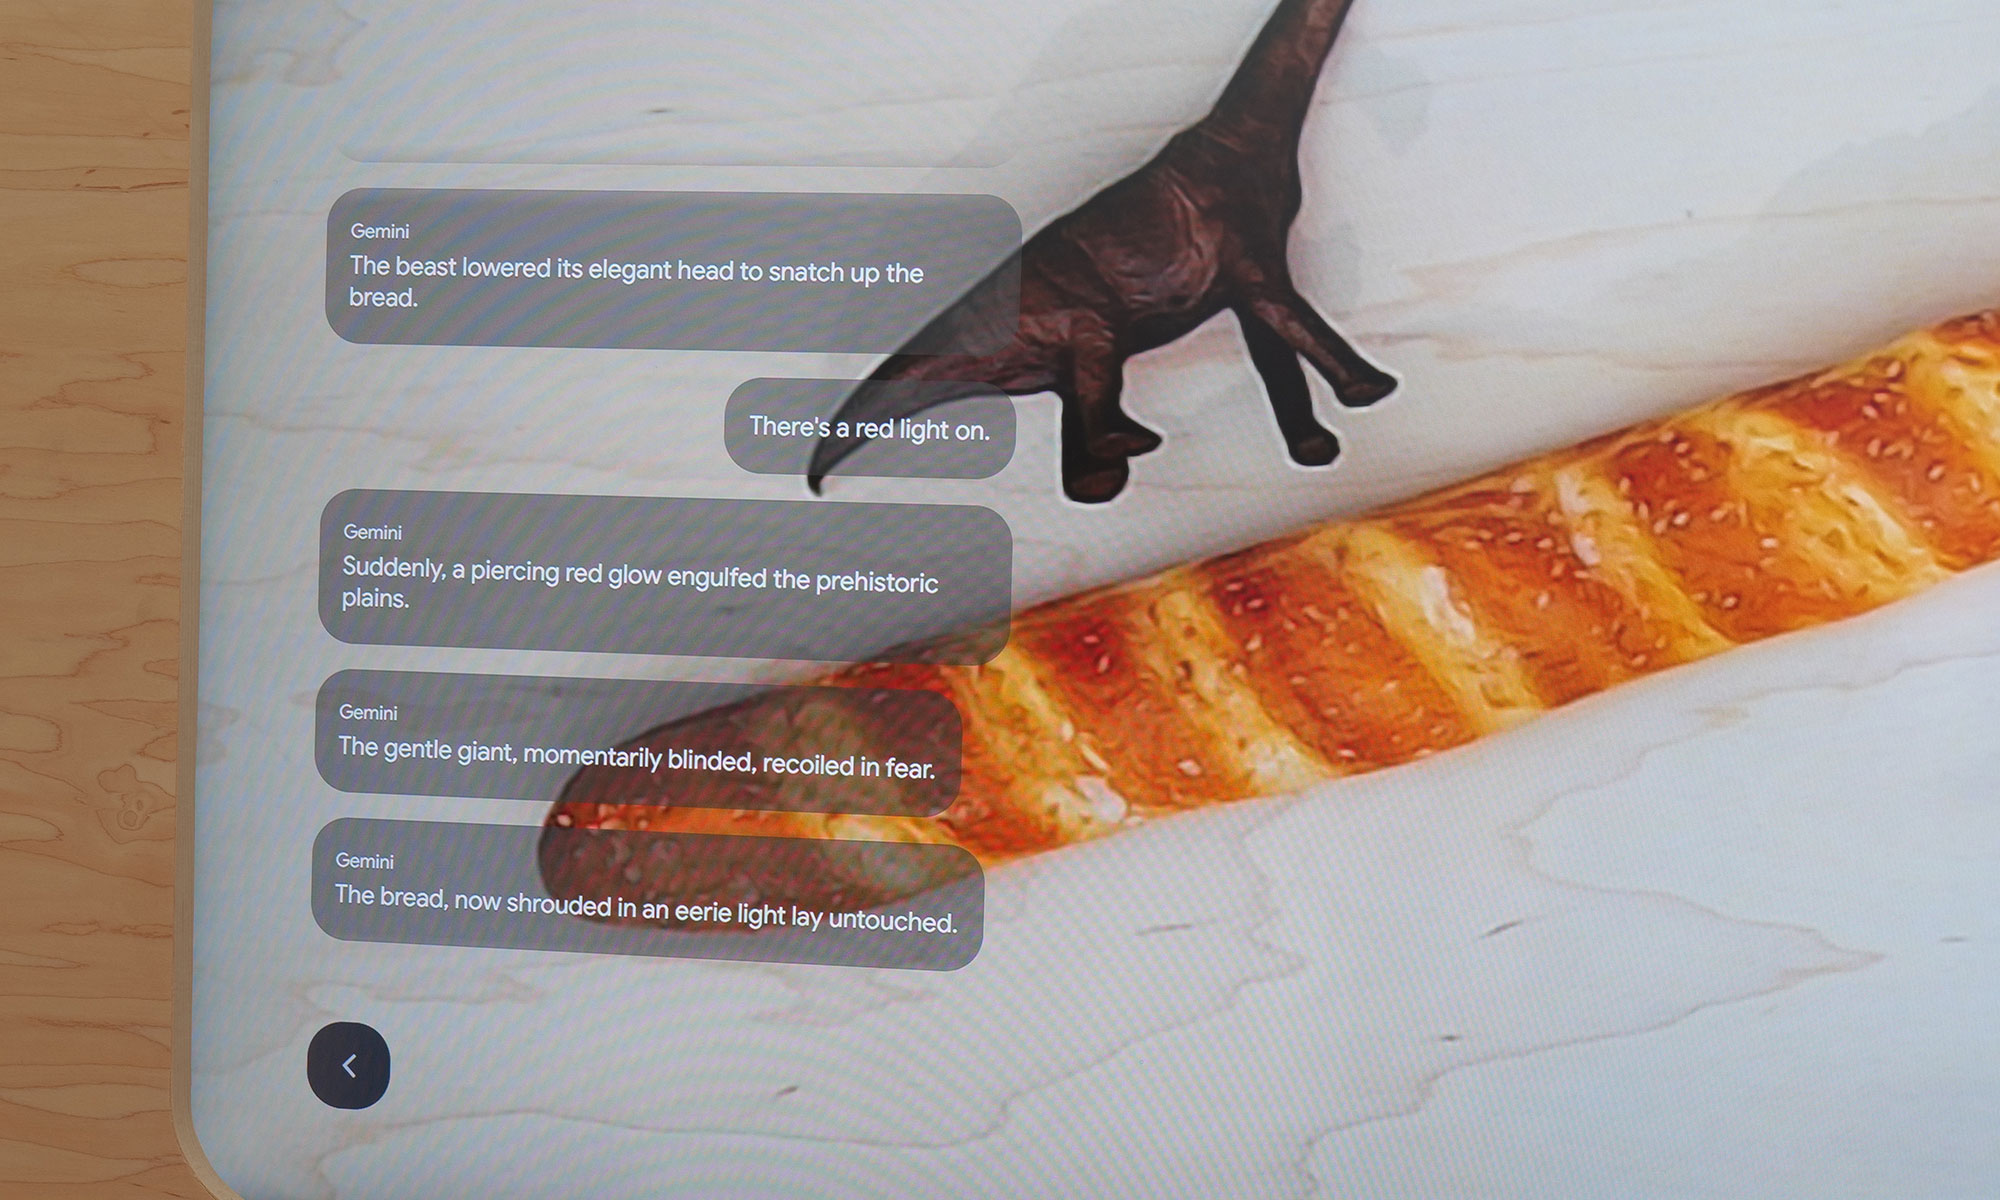 Google ના પ્રોજેક્ટ એસ્ટ્રા દ્વારા બનાવવામાં આવેલ ડાયનાસોર અને બેગુએટ વિશે AI દ્વારા જનરેટ કરેલી વાર્તા